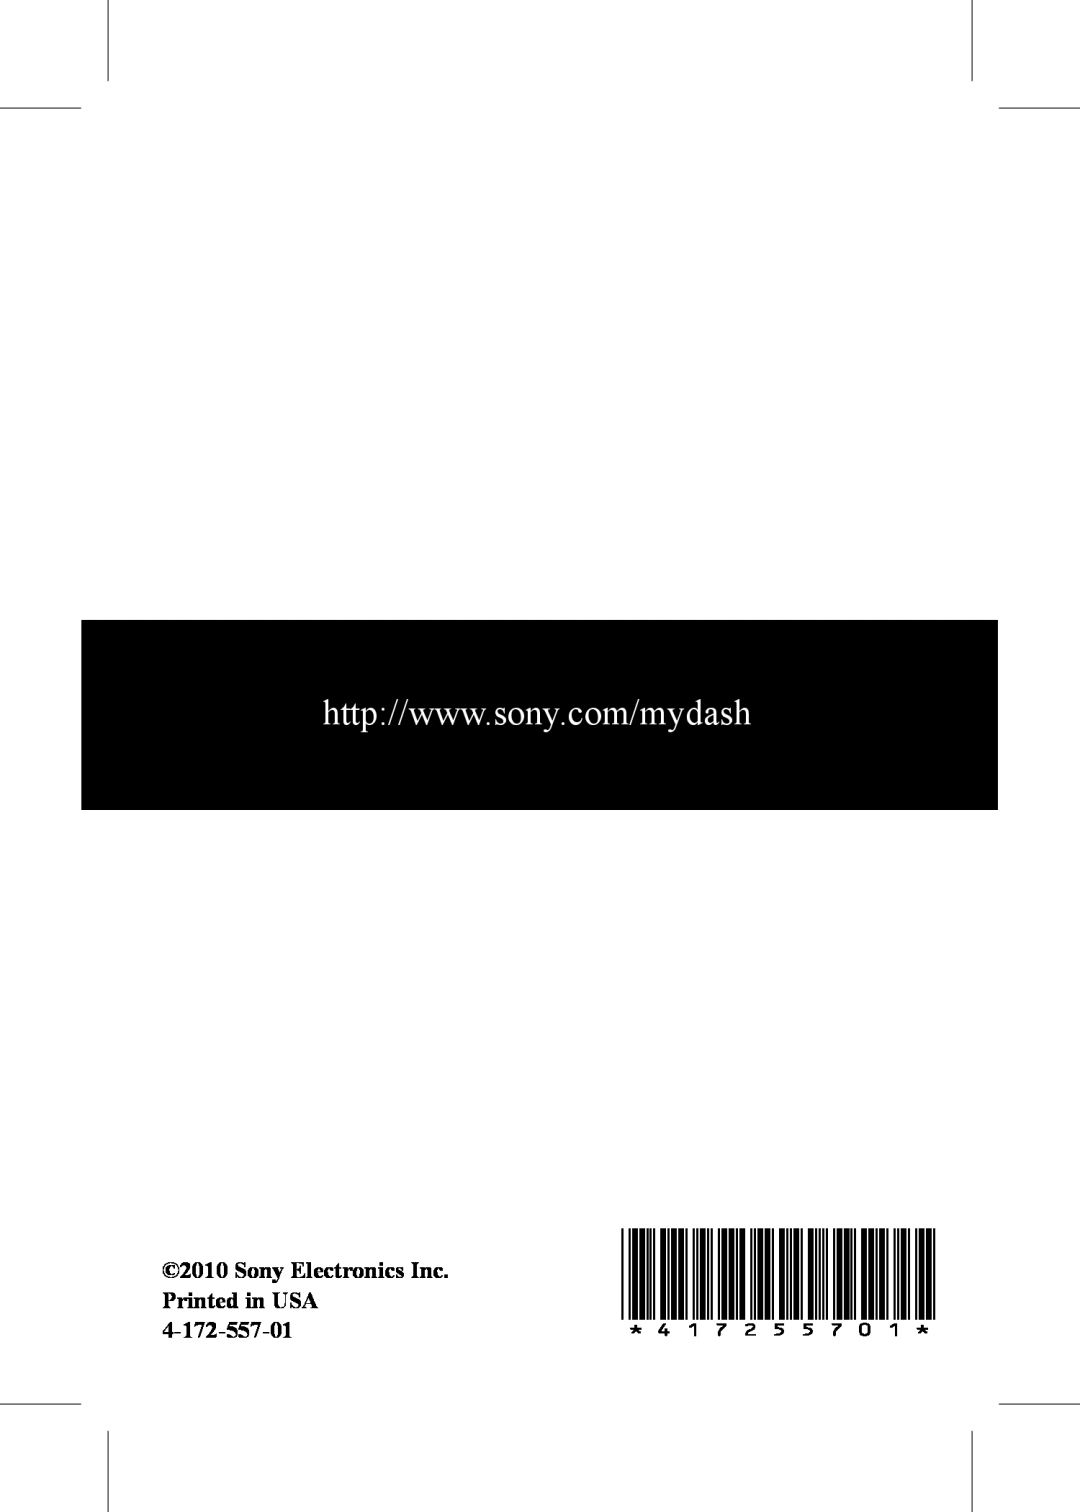 Sony HID-C10 manual 417255701, Sony Electronics Inc, Printed in USA, 4-172-557-01 